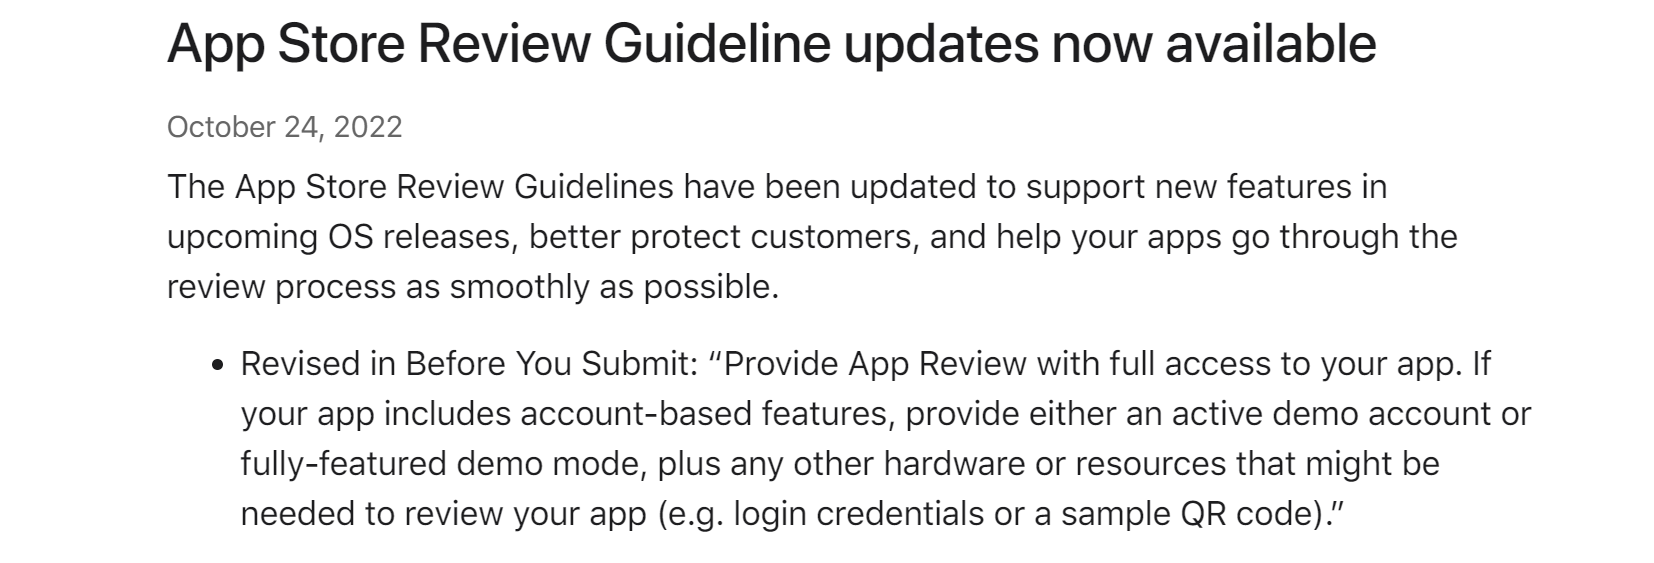 Web3 早报：苹果 App Store 最新审核规则公布通过内购方式提供 NFT 铸造、购买和销售服务、PayPal 已添加密钥（Passkeys）作为其登录方式、NFT 平台 Exclusible